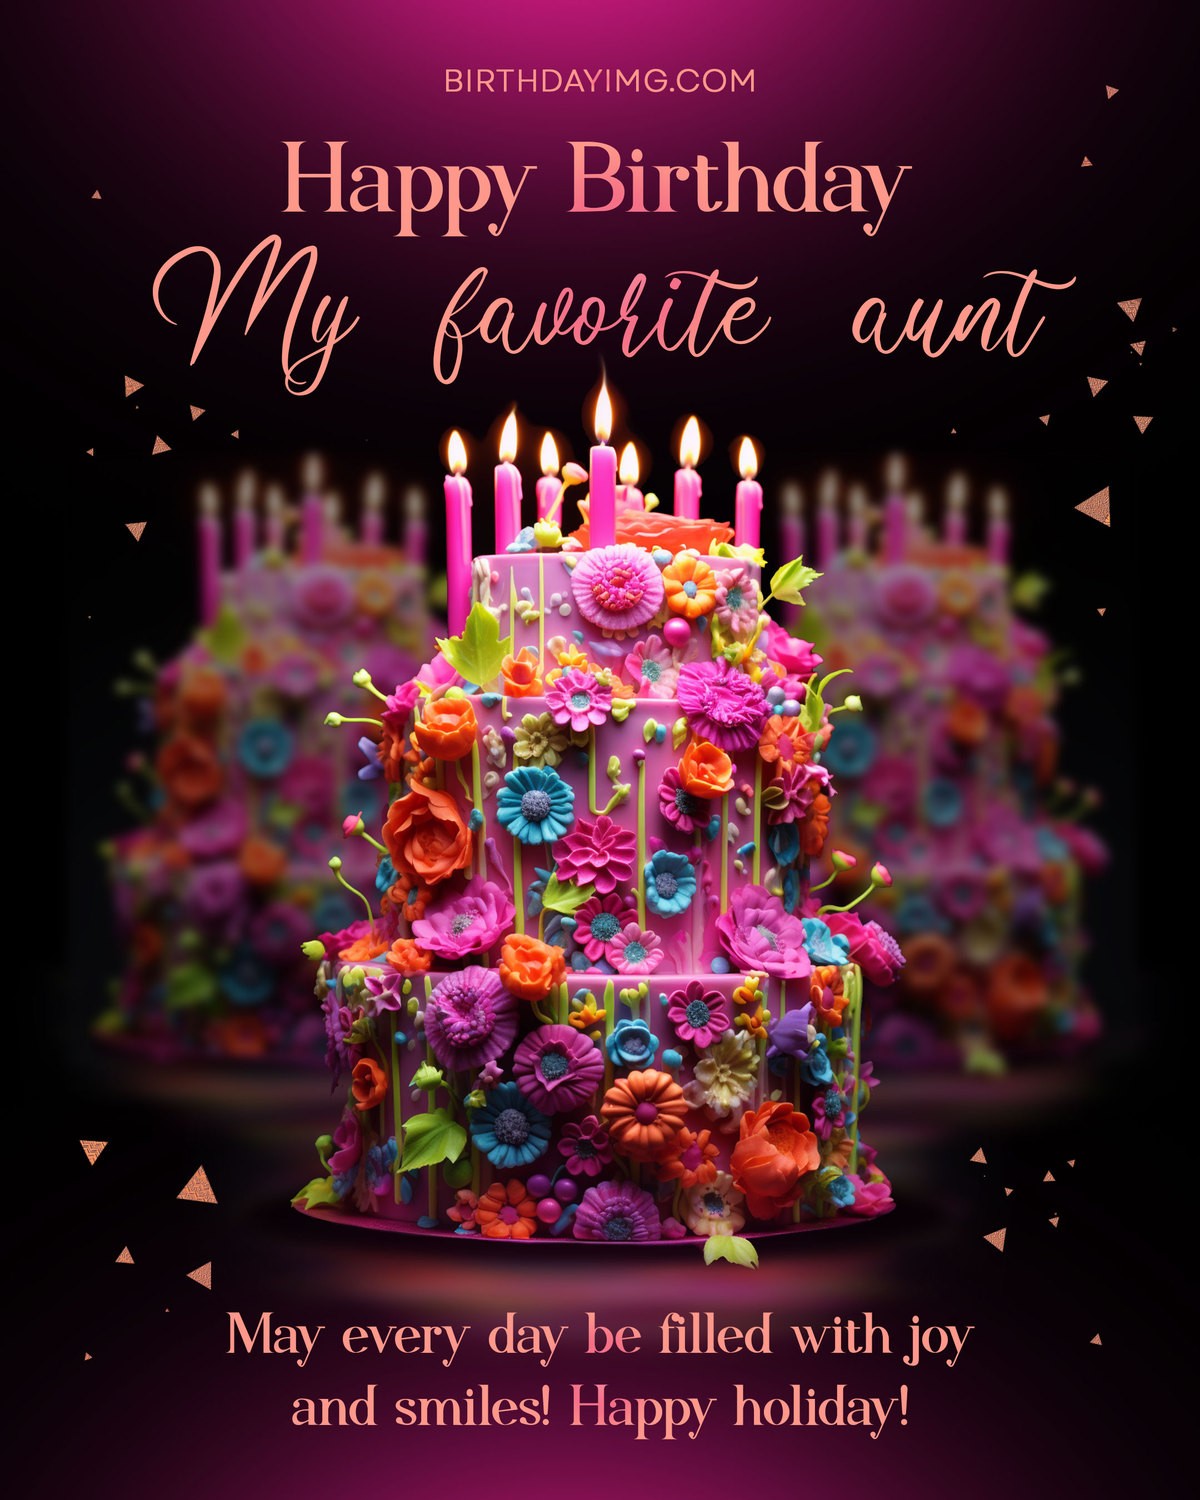 Free Birthday Image for Aunt with Cake - birthdayimg.com